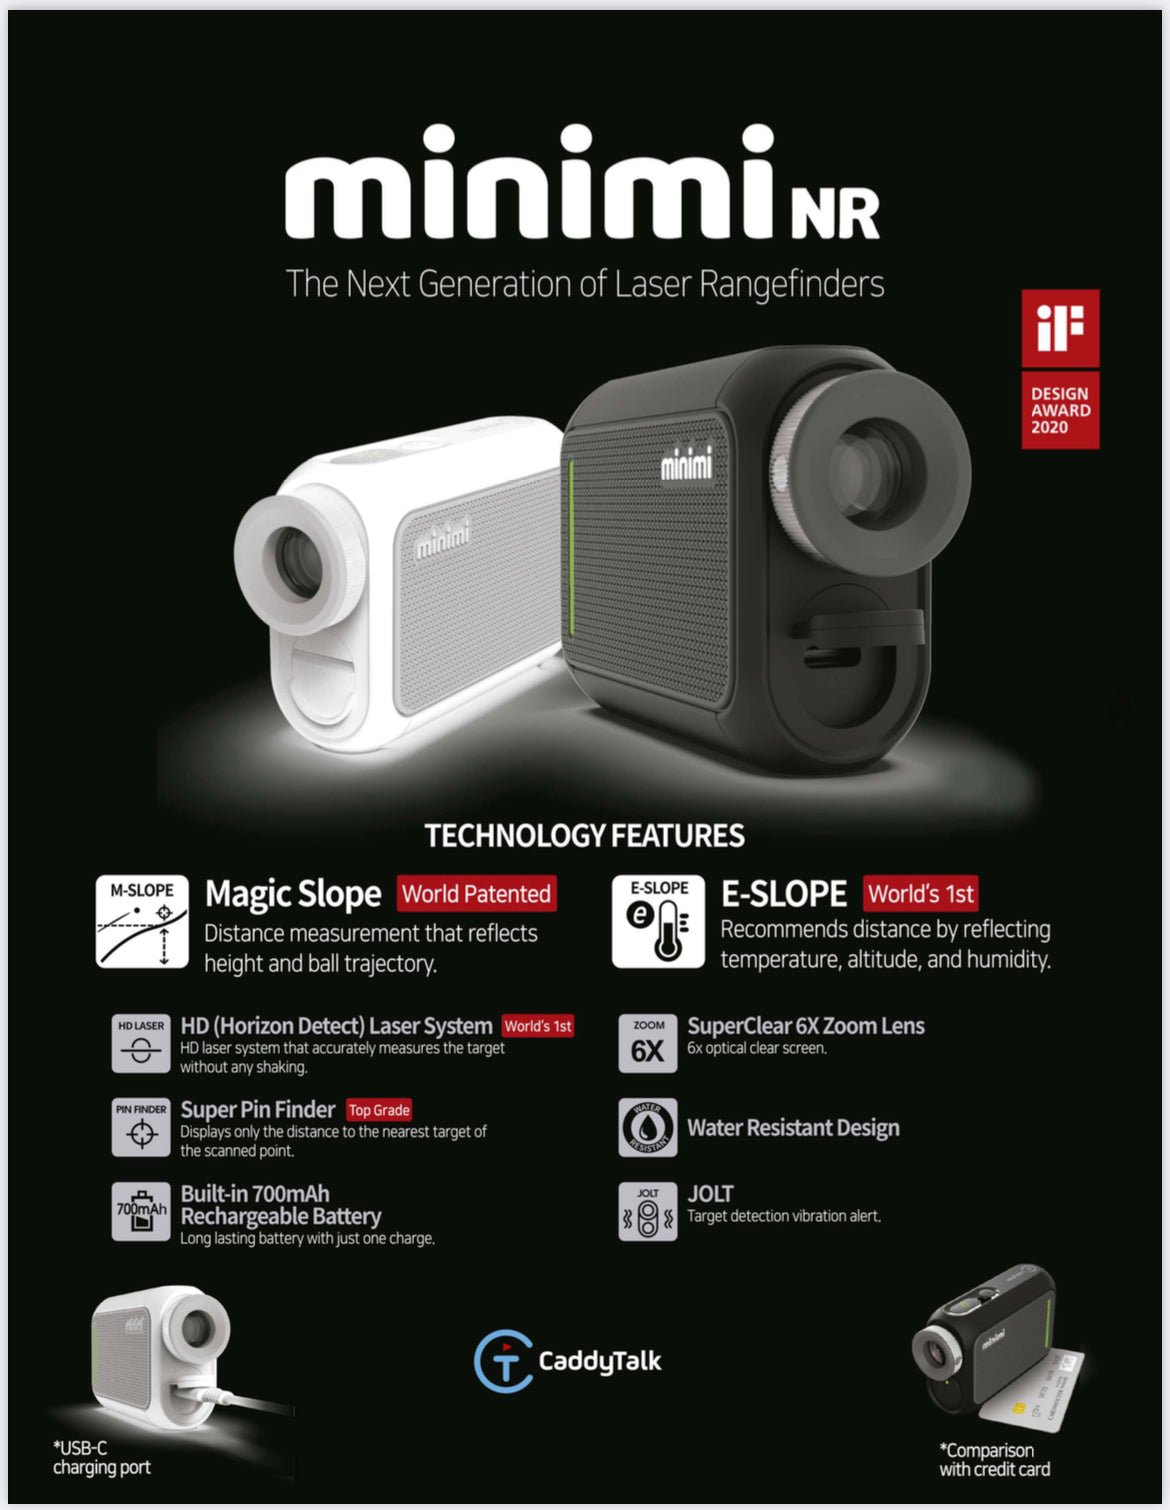 CaddyTalk Minimi Rangefinder - Free 1-2 Day UK Delivery Included